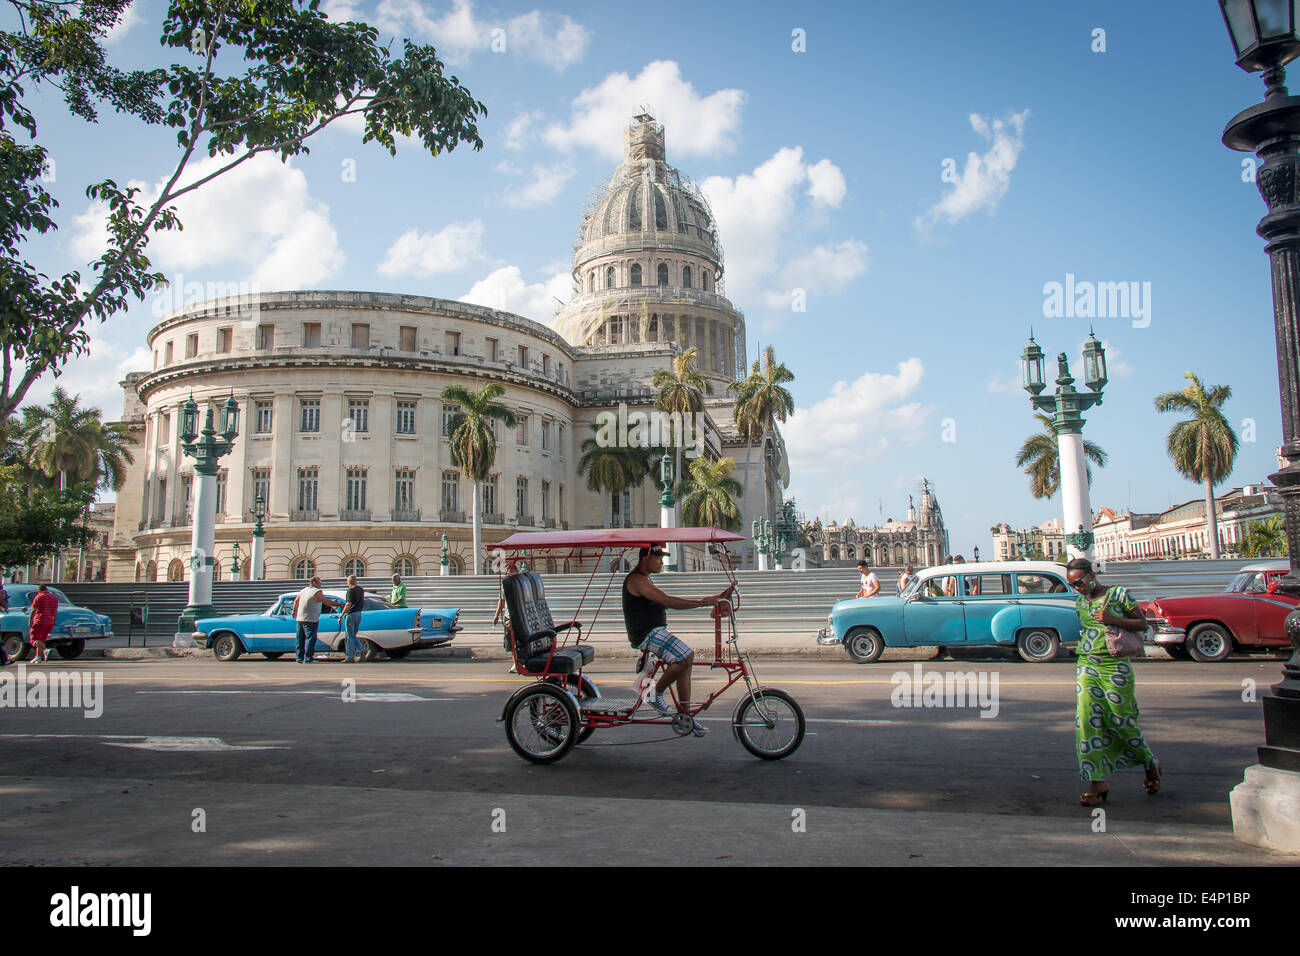 Nationalen Capitol Building mit Velo-Rikscha in Vordergrund, Capitolio, Havanna, Kuba Stockfoto